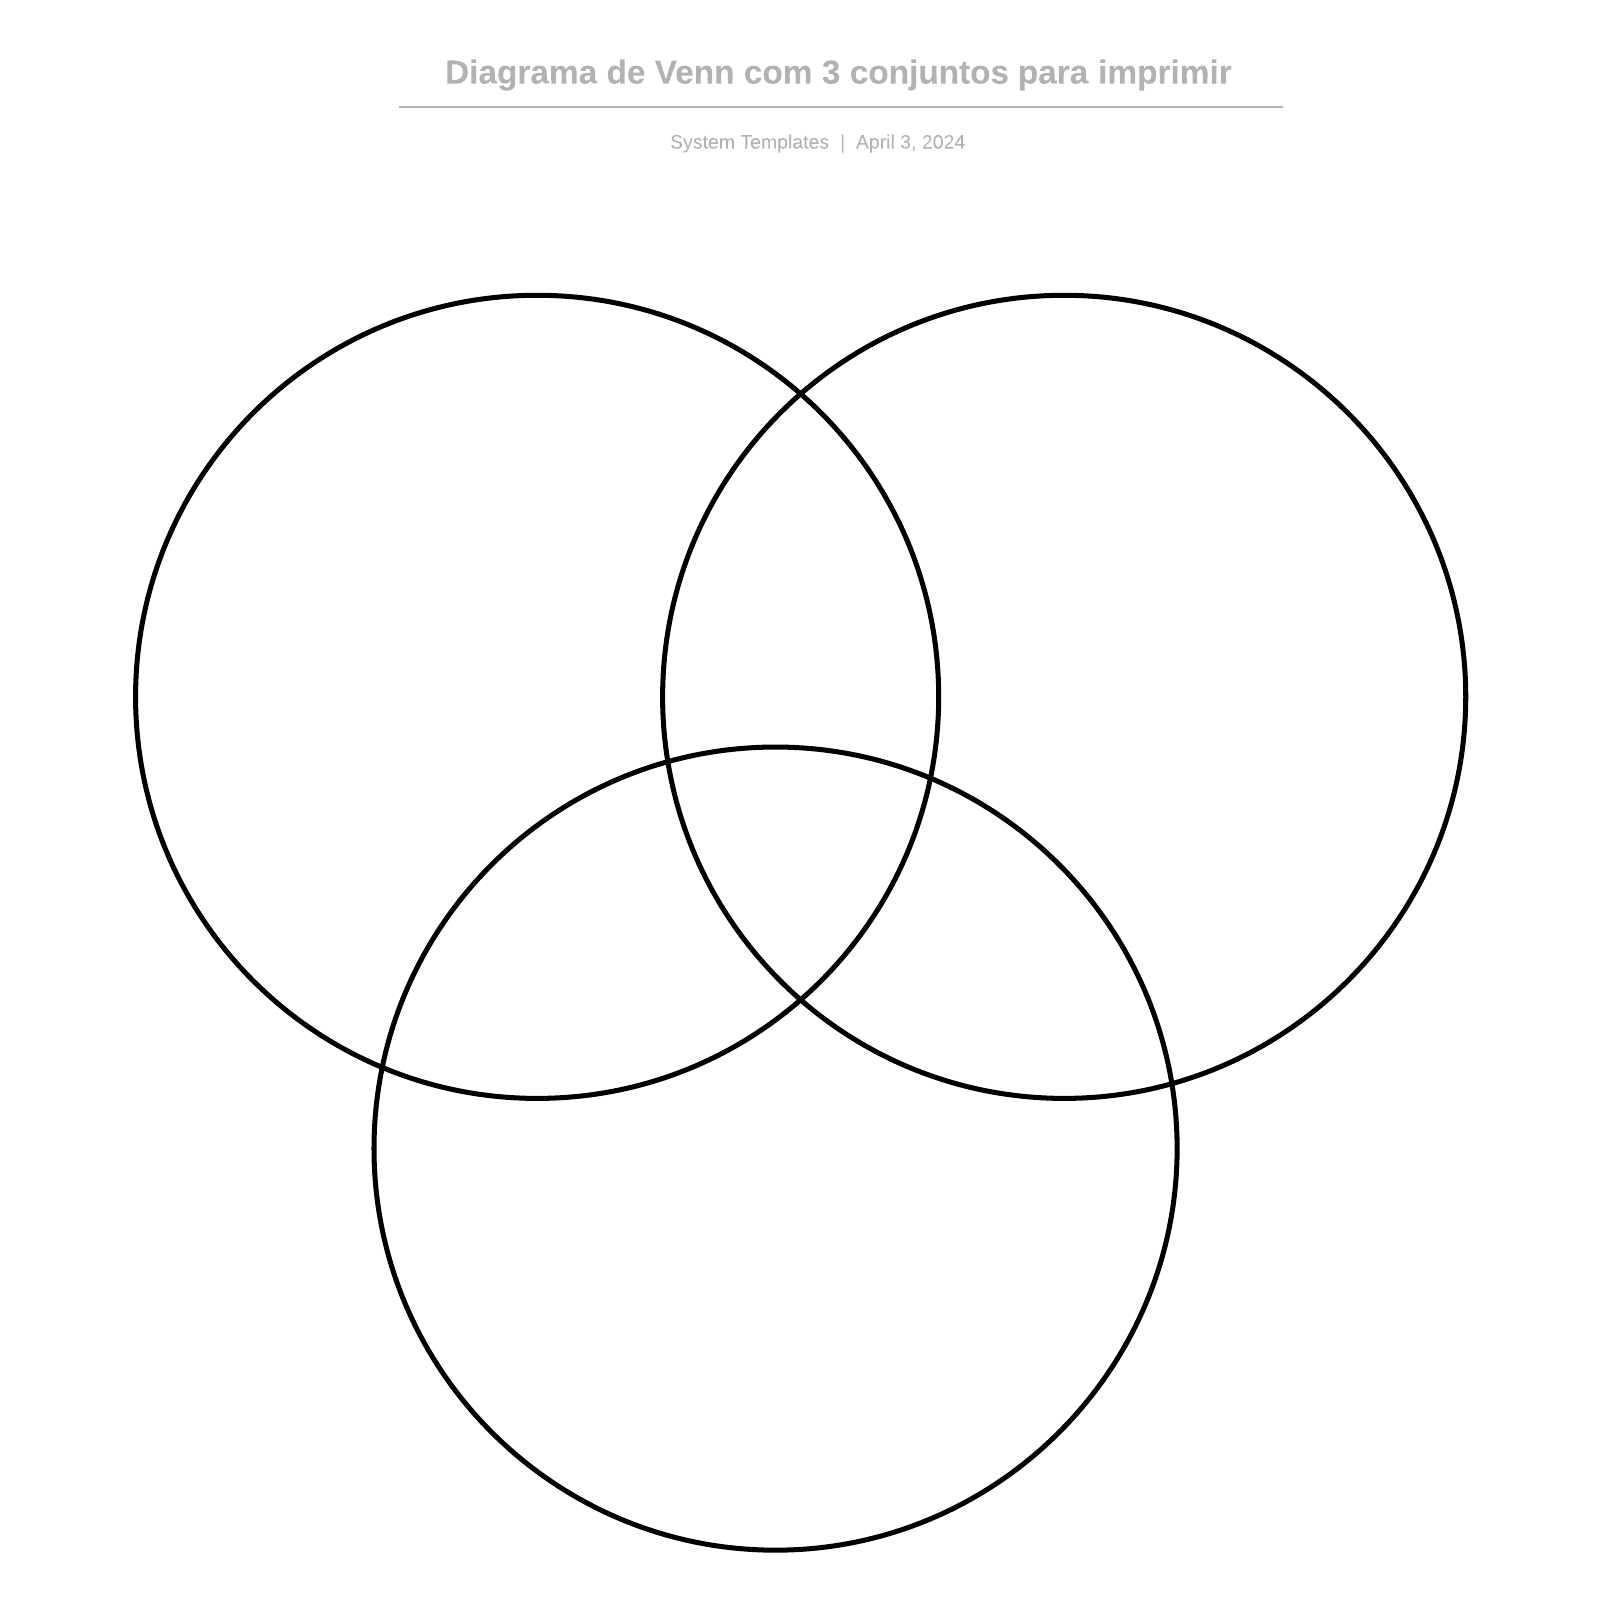 Diagrama de Venn com 3 conjuntos para imprimir example